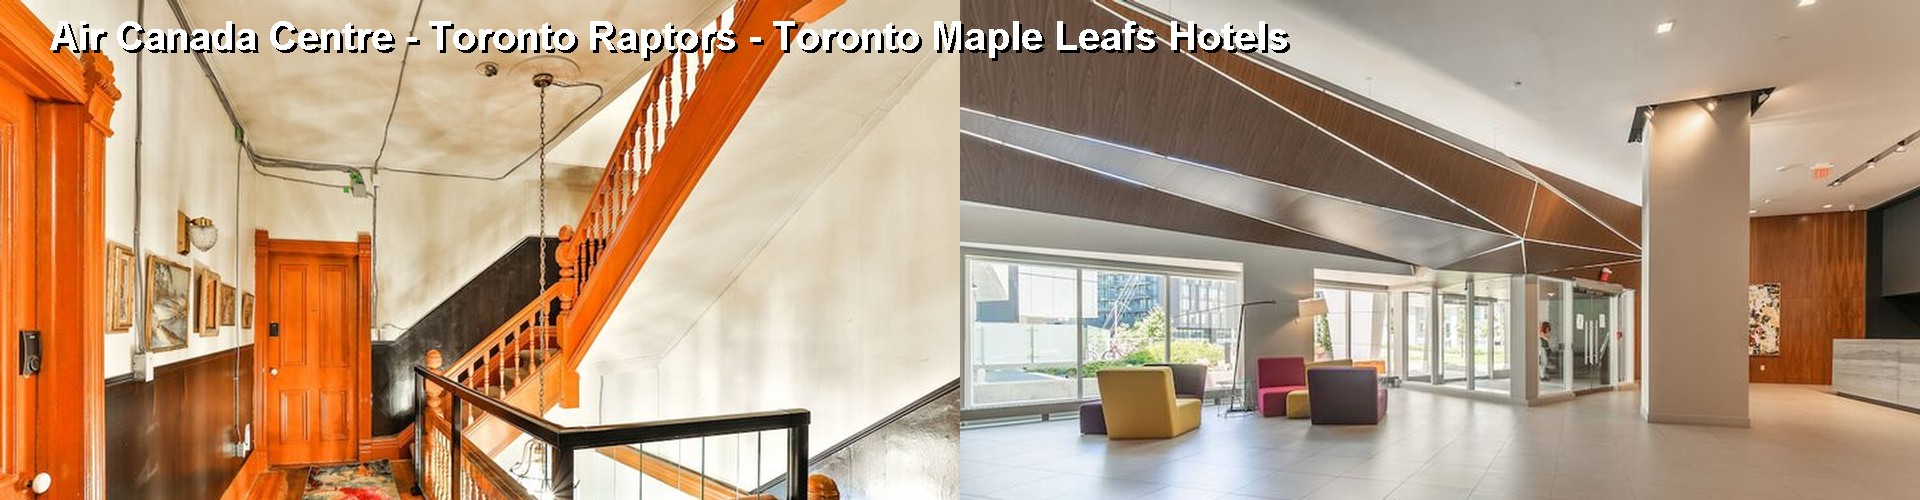 5 Best Hotels near Air Canada Centre - Toronto Raptors - Toronto Maple Leafs